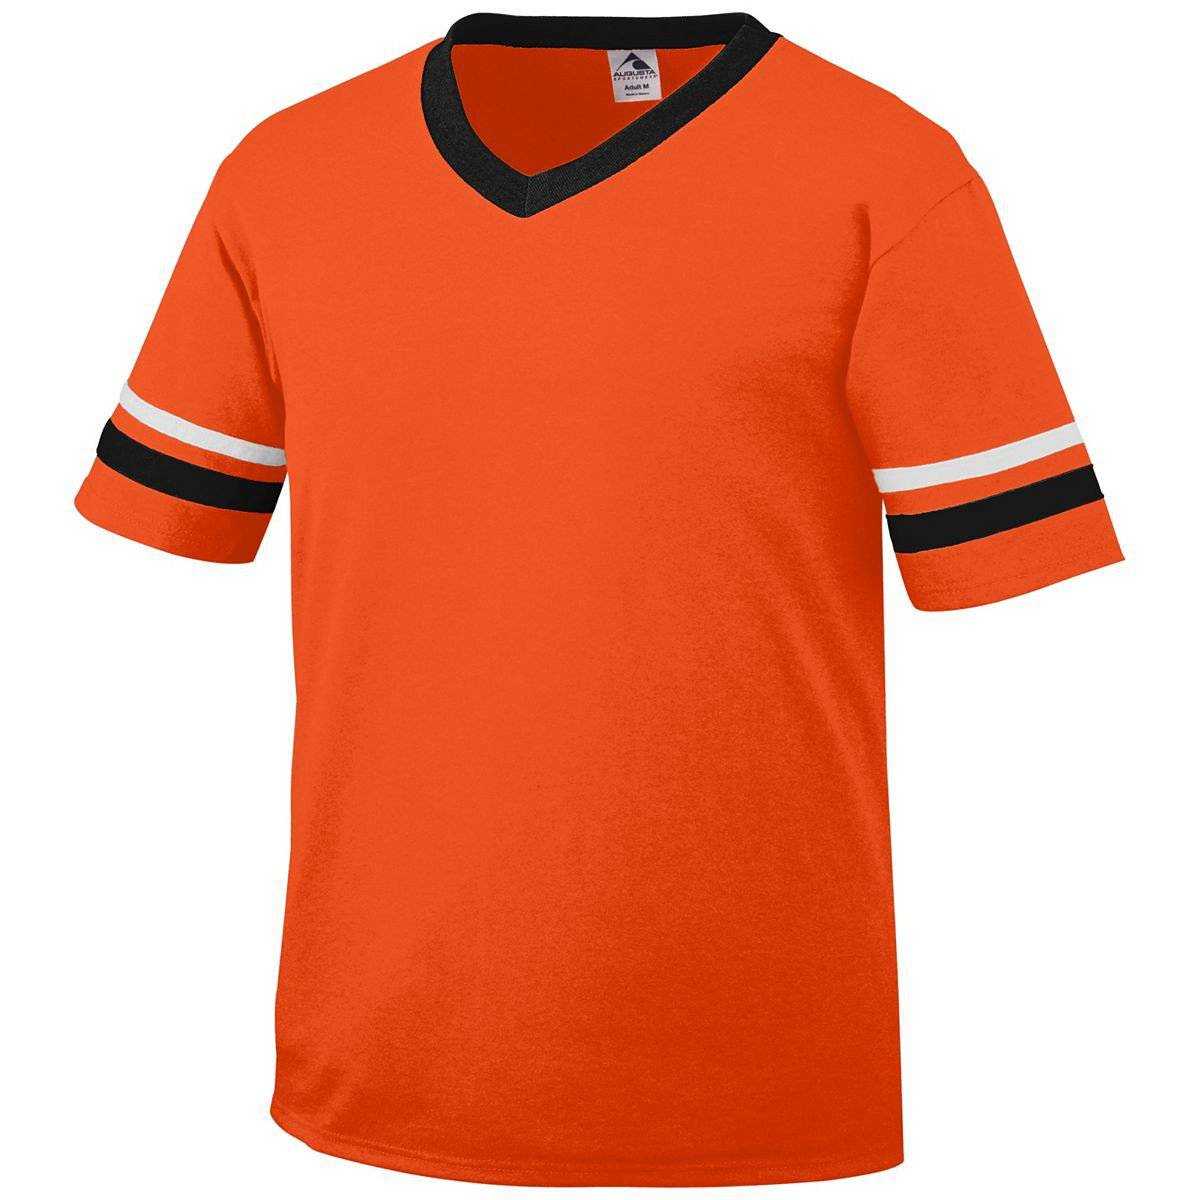 Augusta 361 Sleeve Stripe Jersey - Youth - Orange Black White - HIT a Double